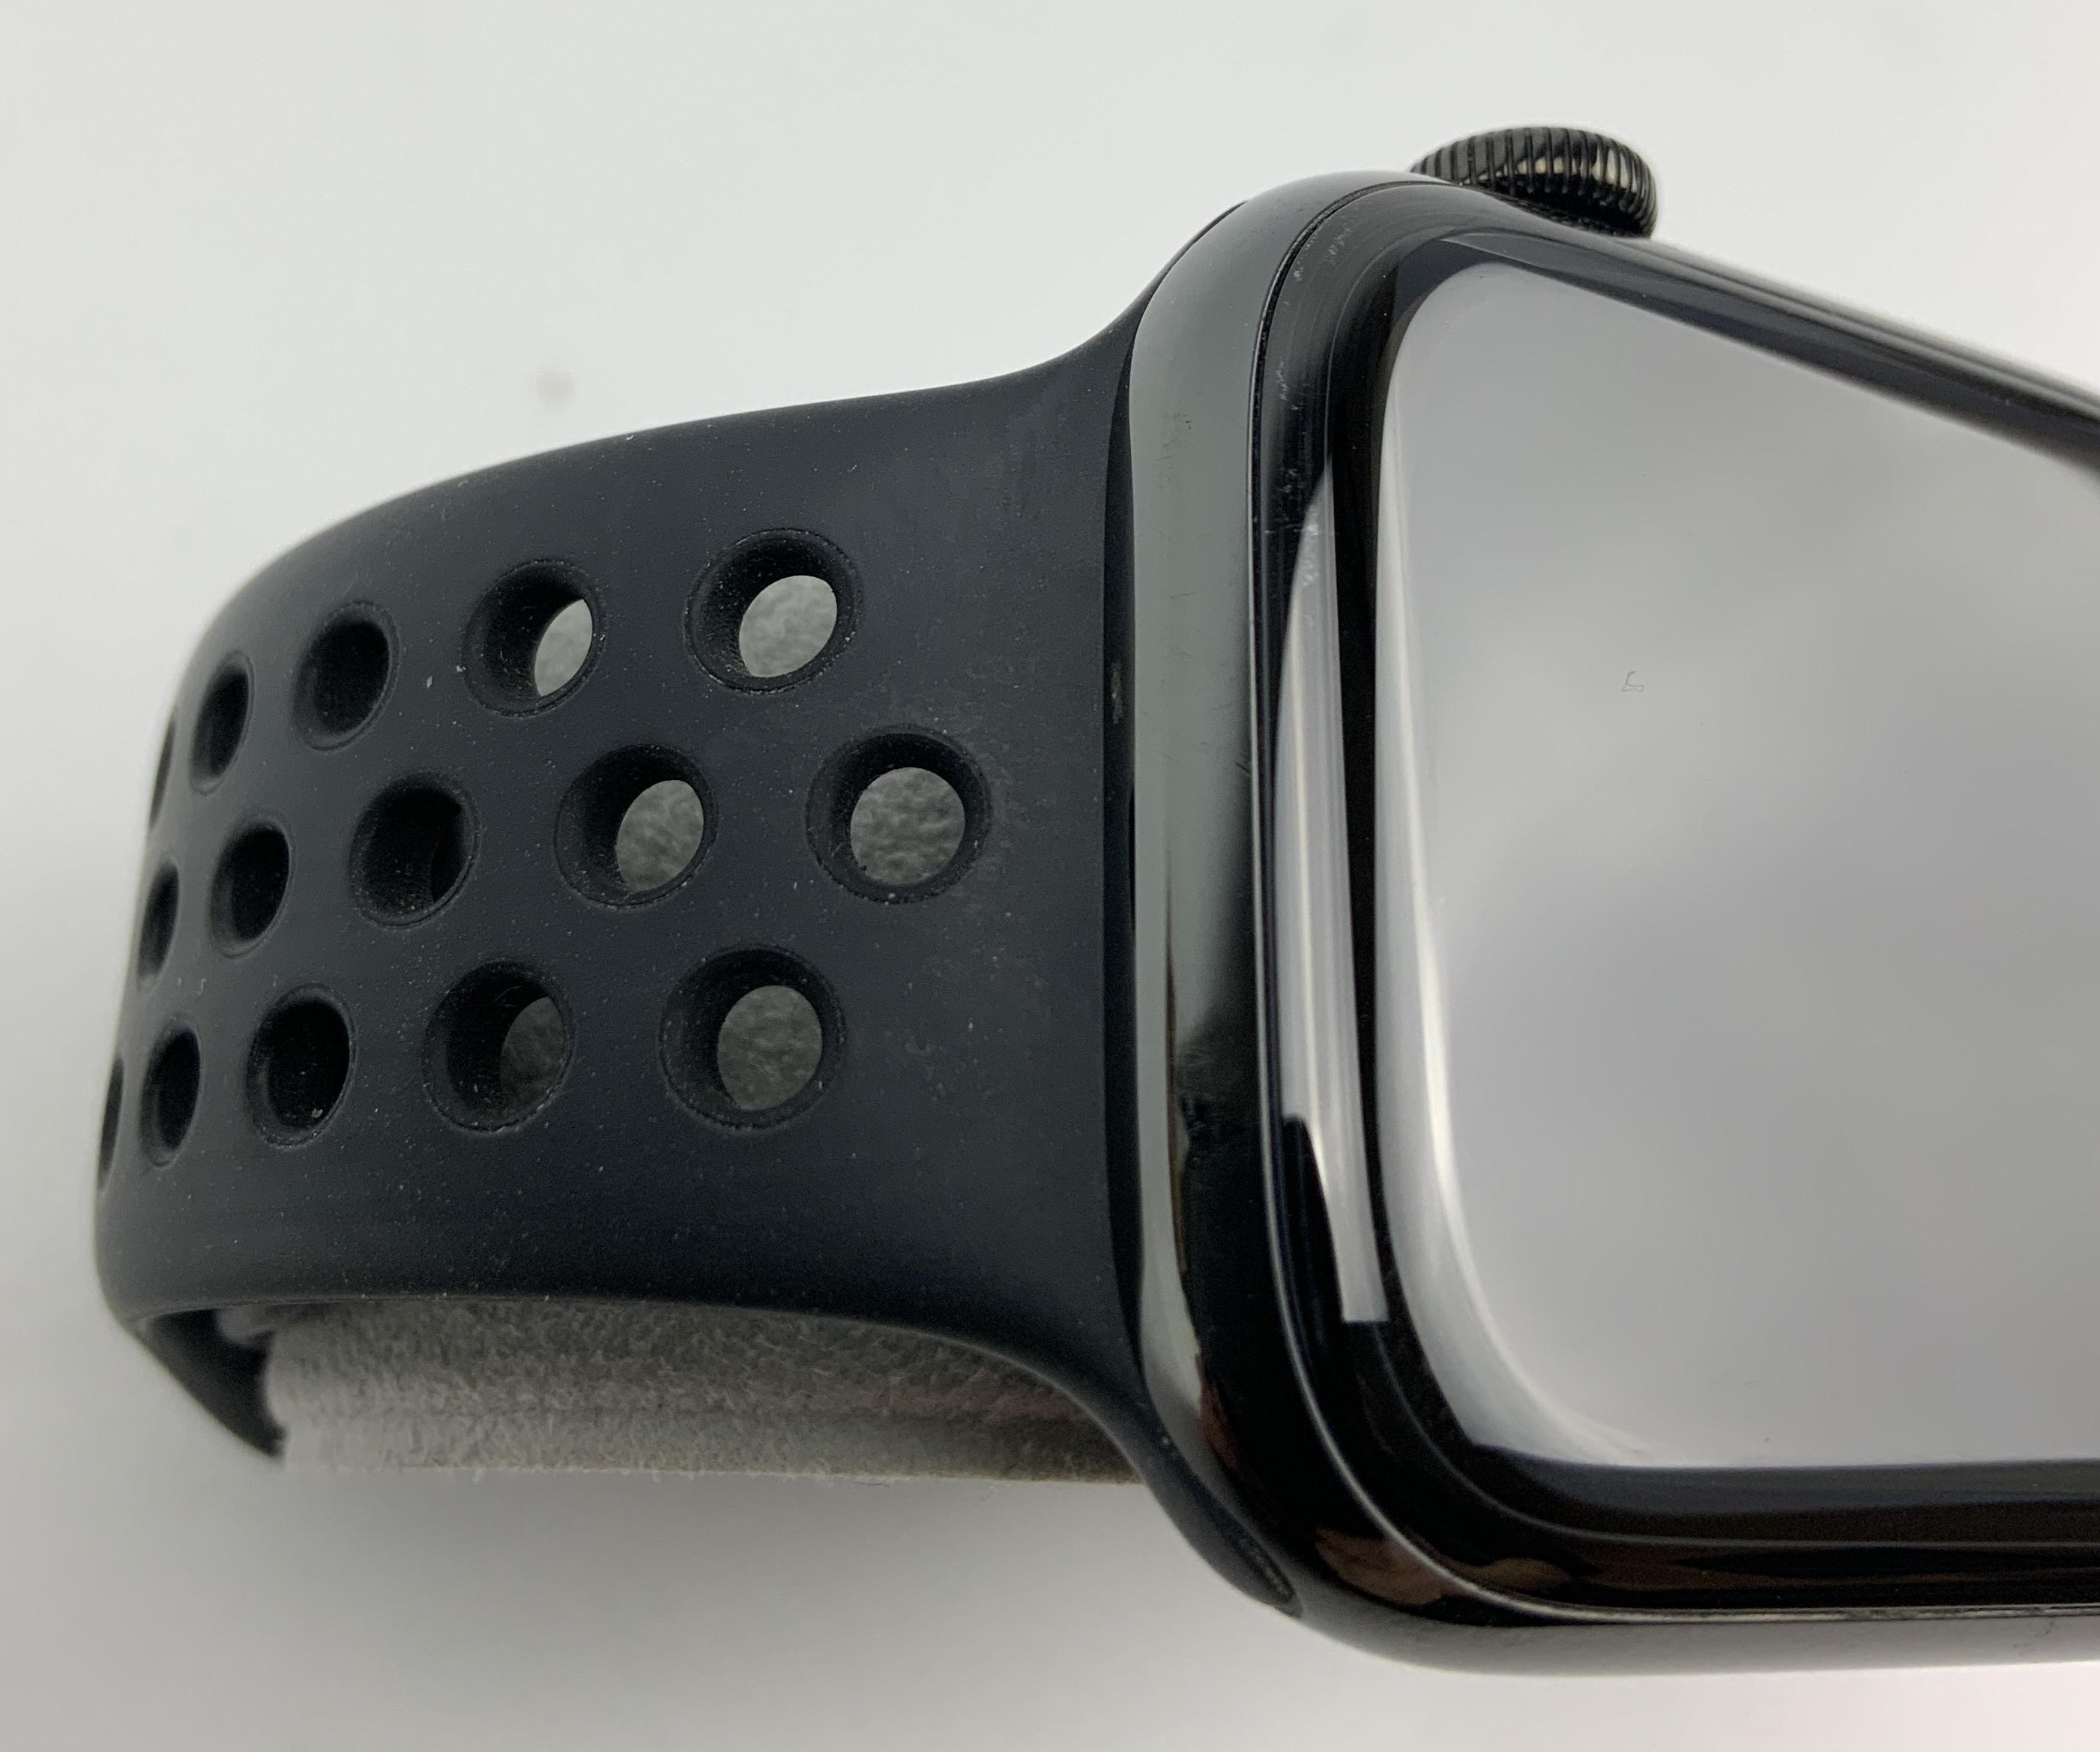 Watch Series 5 Steel Cellular (44mm), Space Black, imagen 2